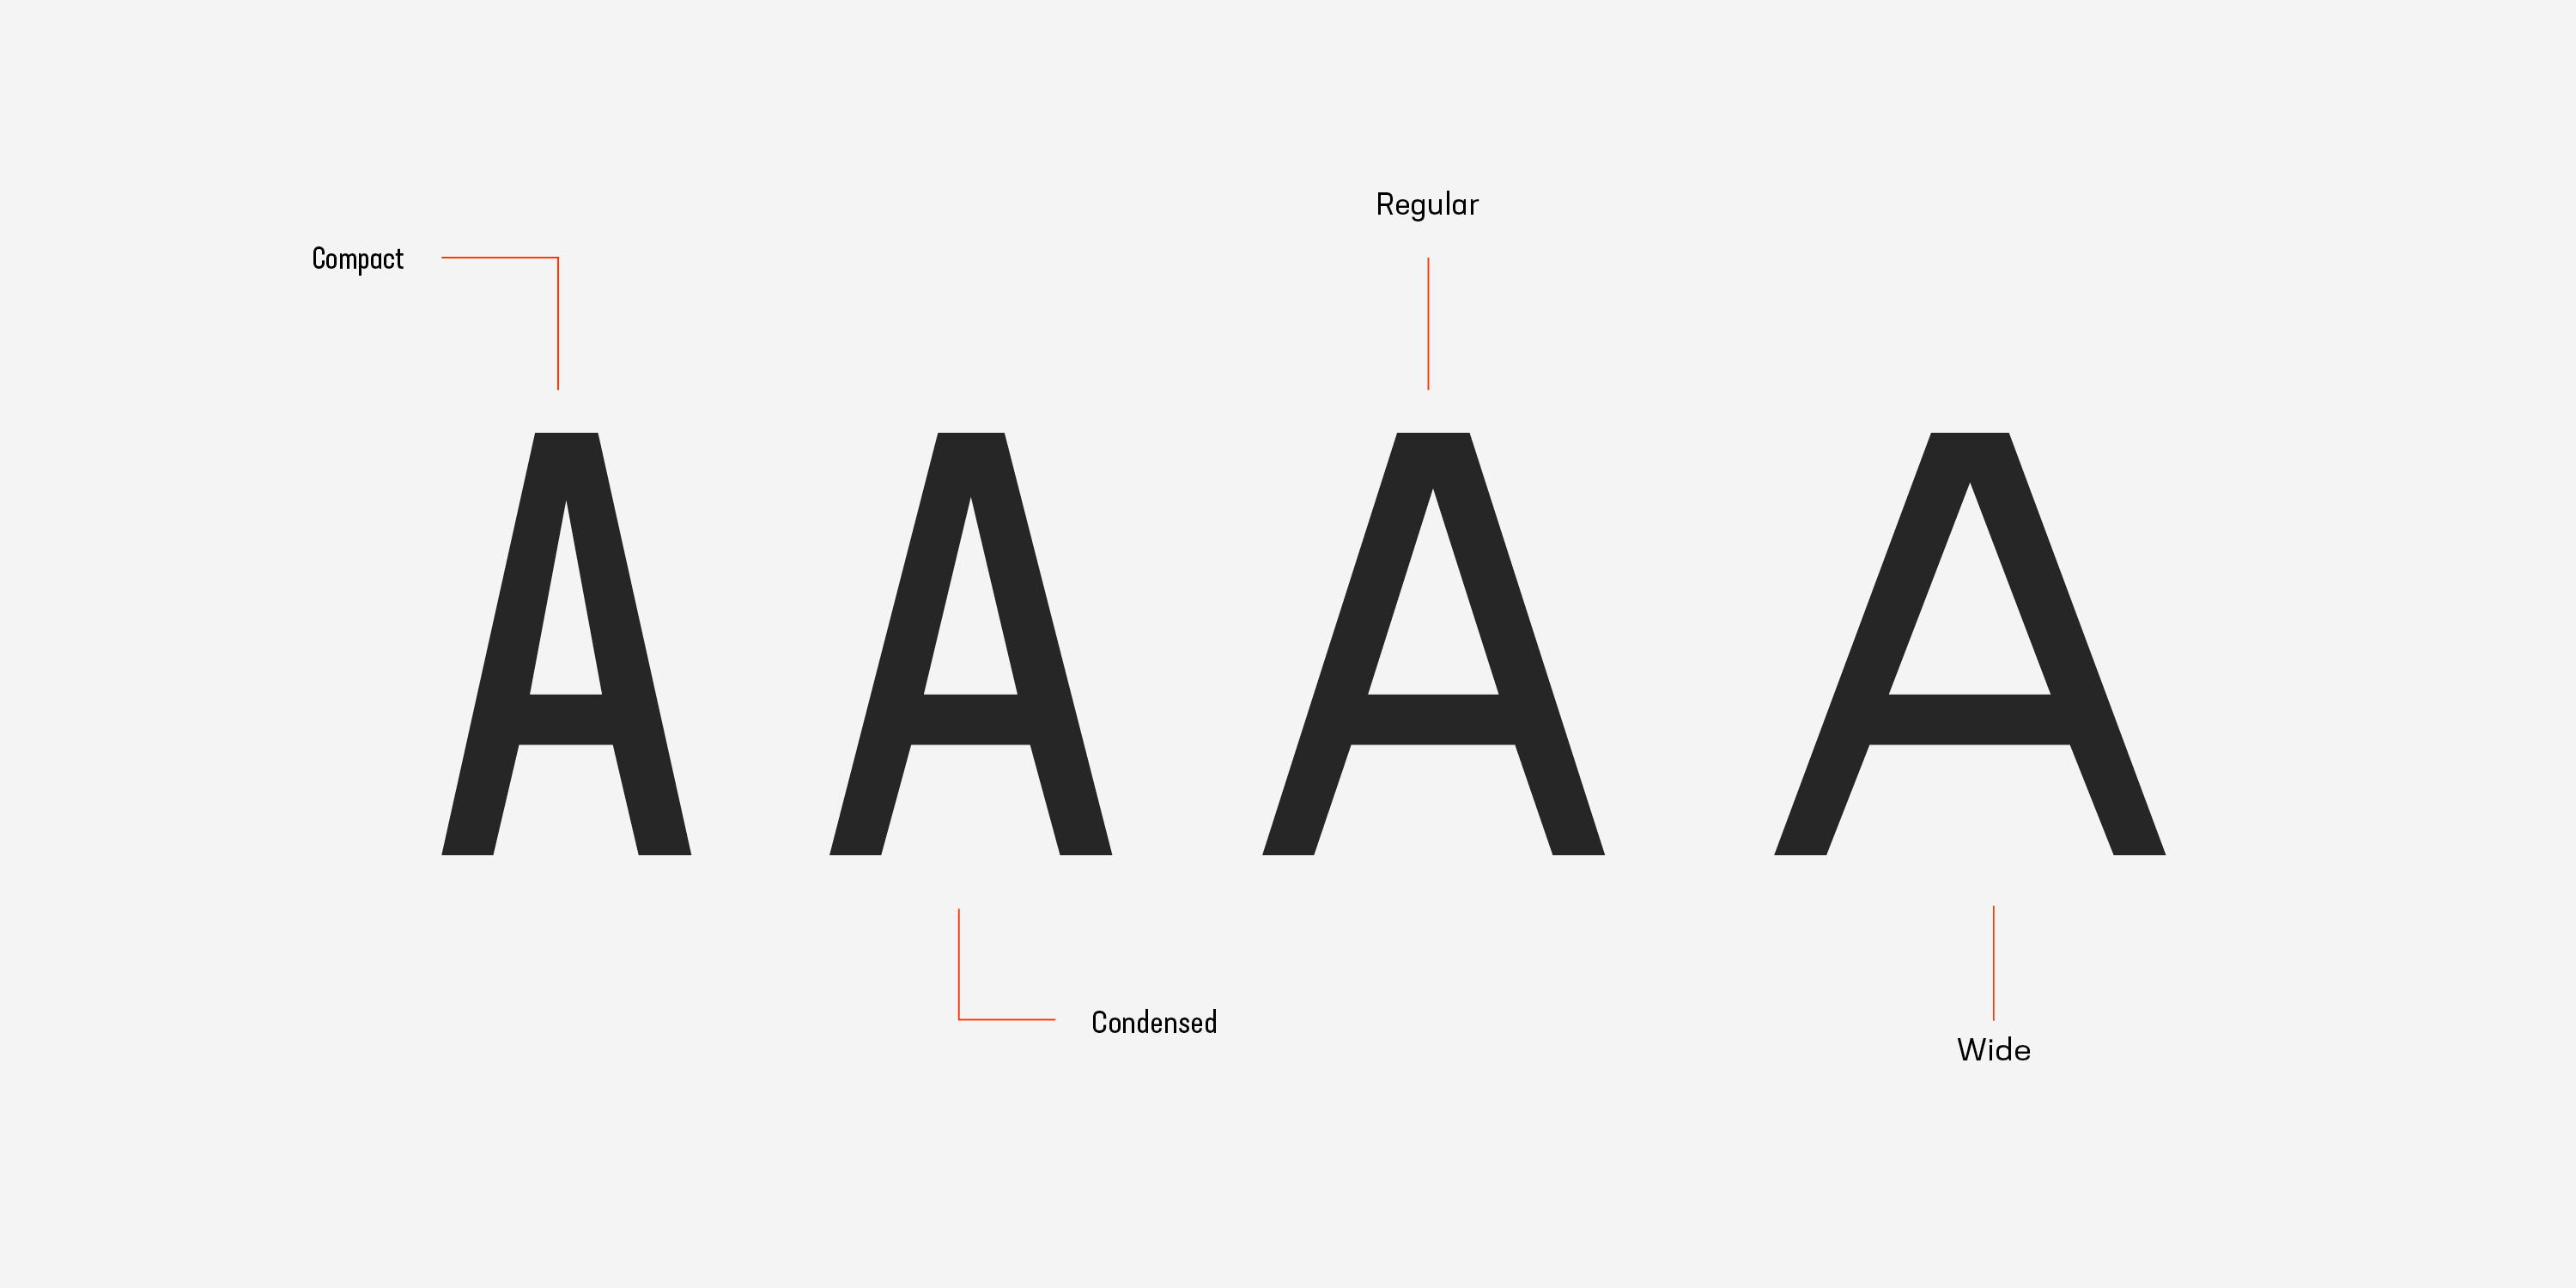 Neusa Next Pro Wide Thin Font preview